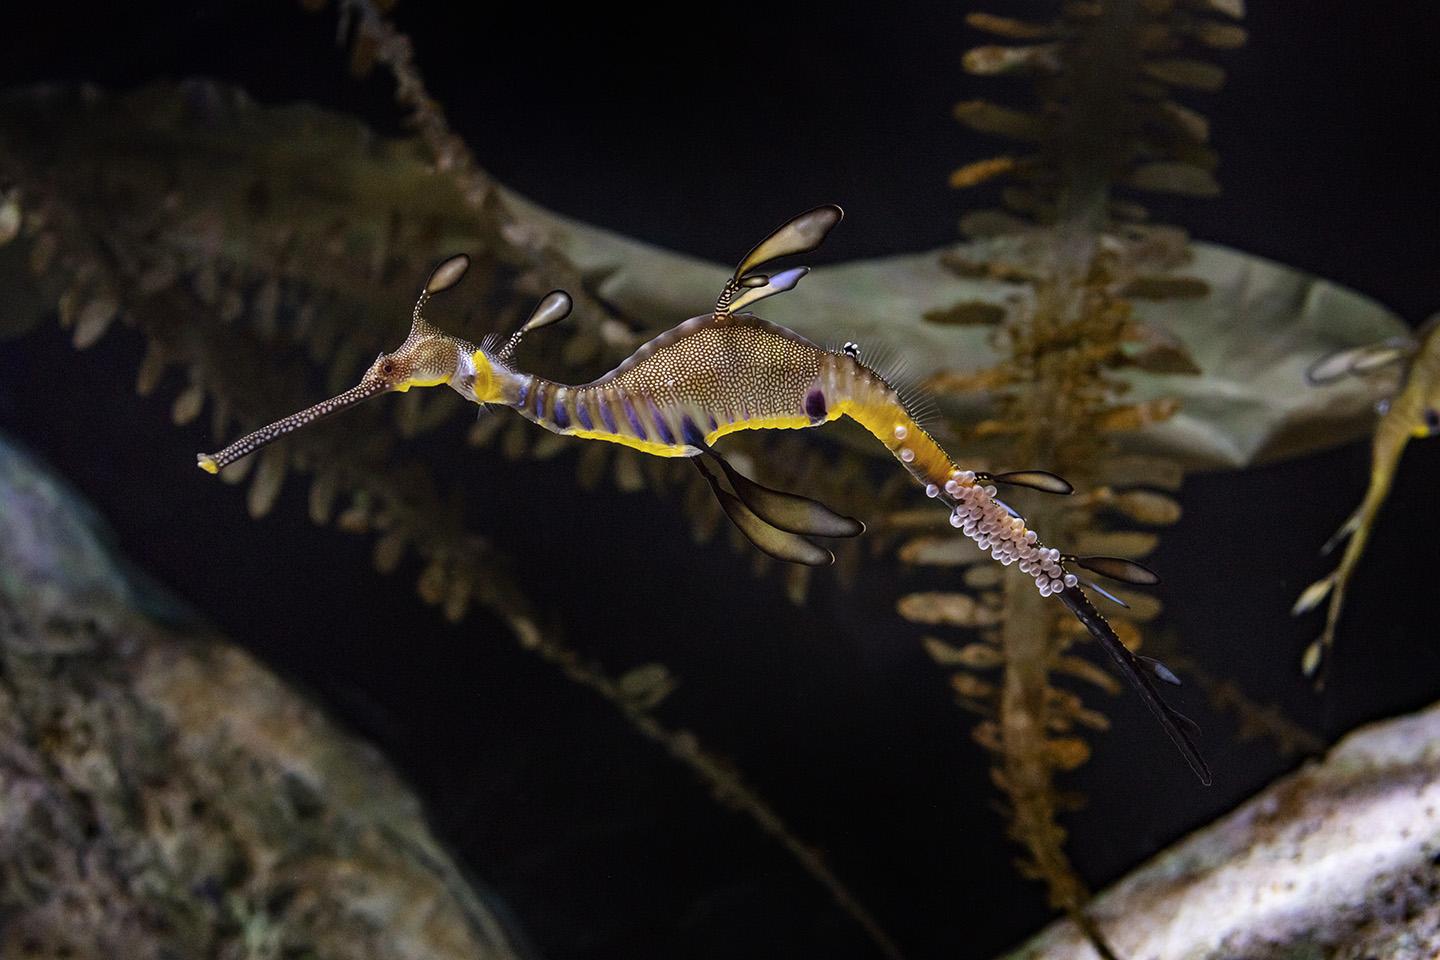 A male weedy sea dragon at Shedd Aquarium is carrying 46 fertile eggs on his tail after accepting an egg transfer from a female weedy sea dragon. (Courtesy Shedd Aquarium)